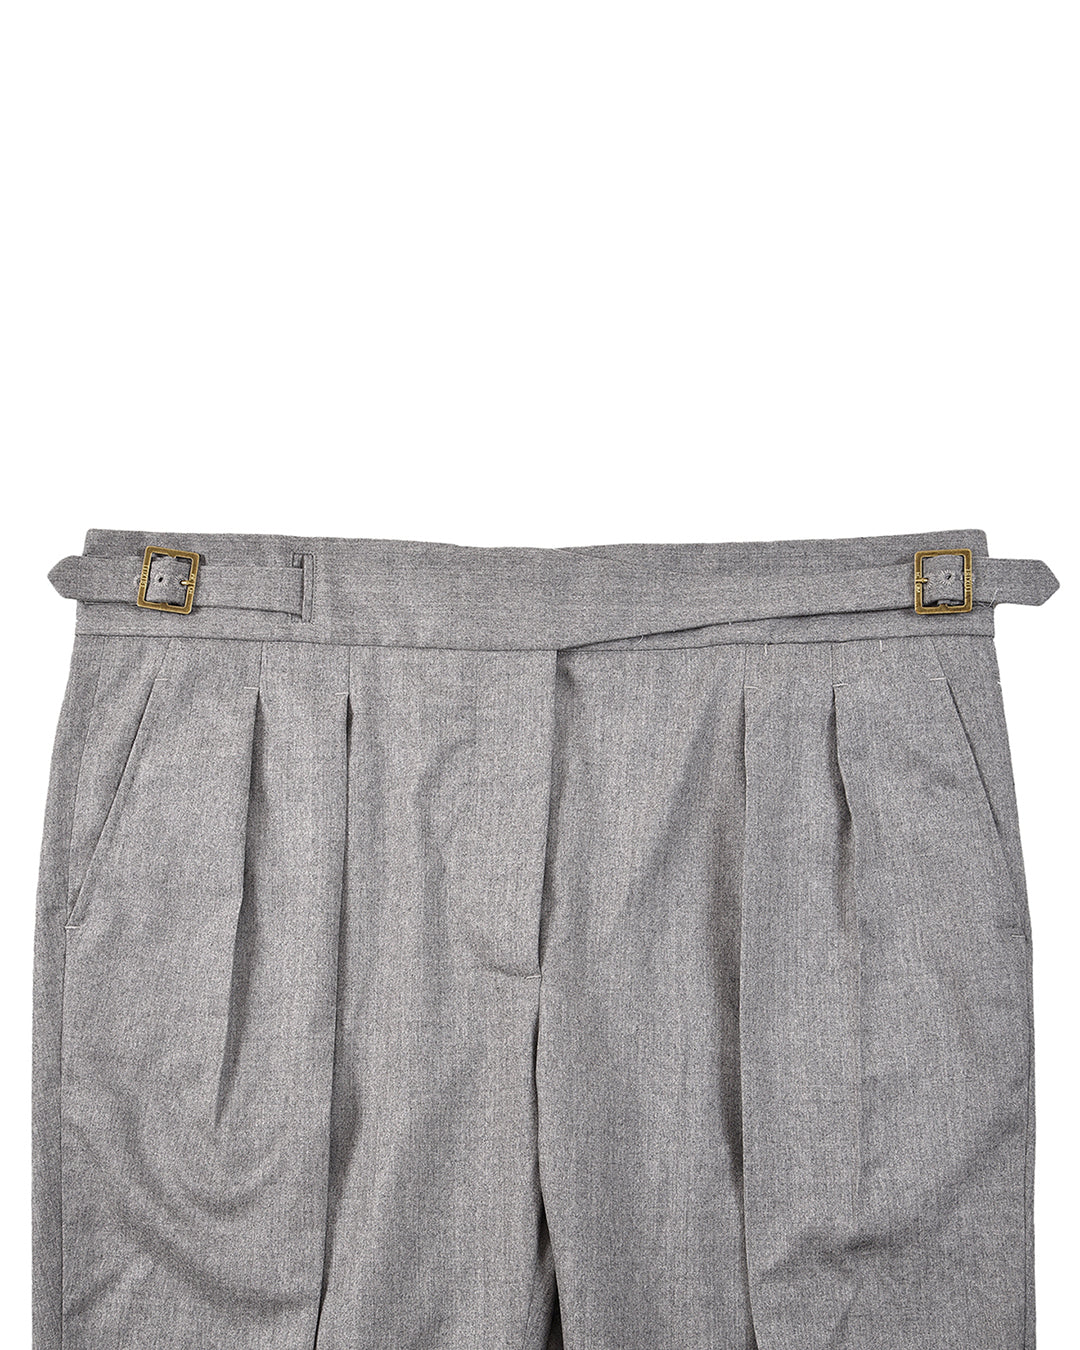 Gurkha Pant in Vitale Barberis Canonico - Flannels  Light Grey